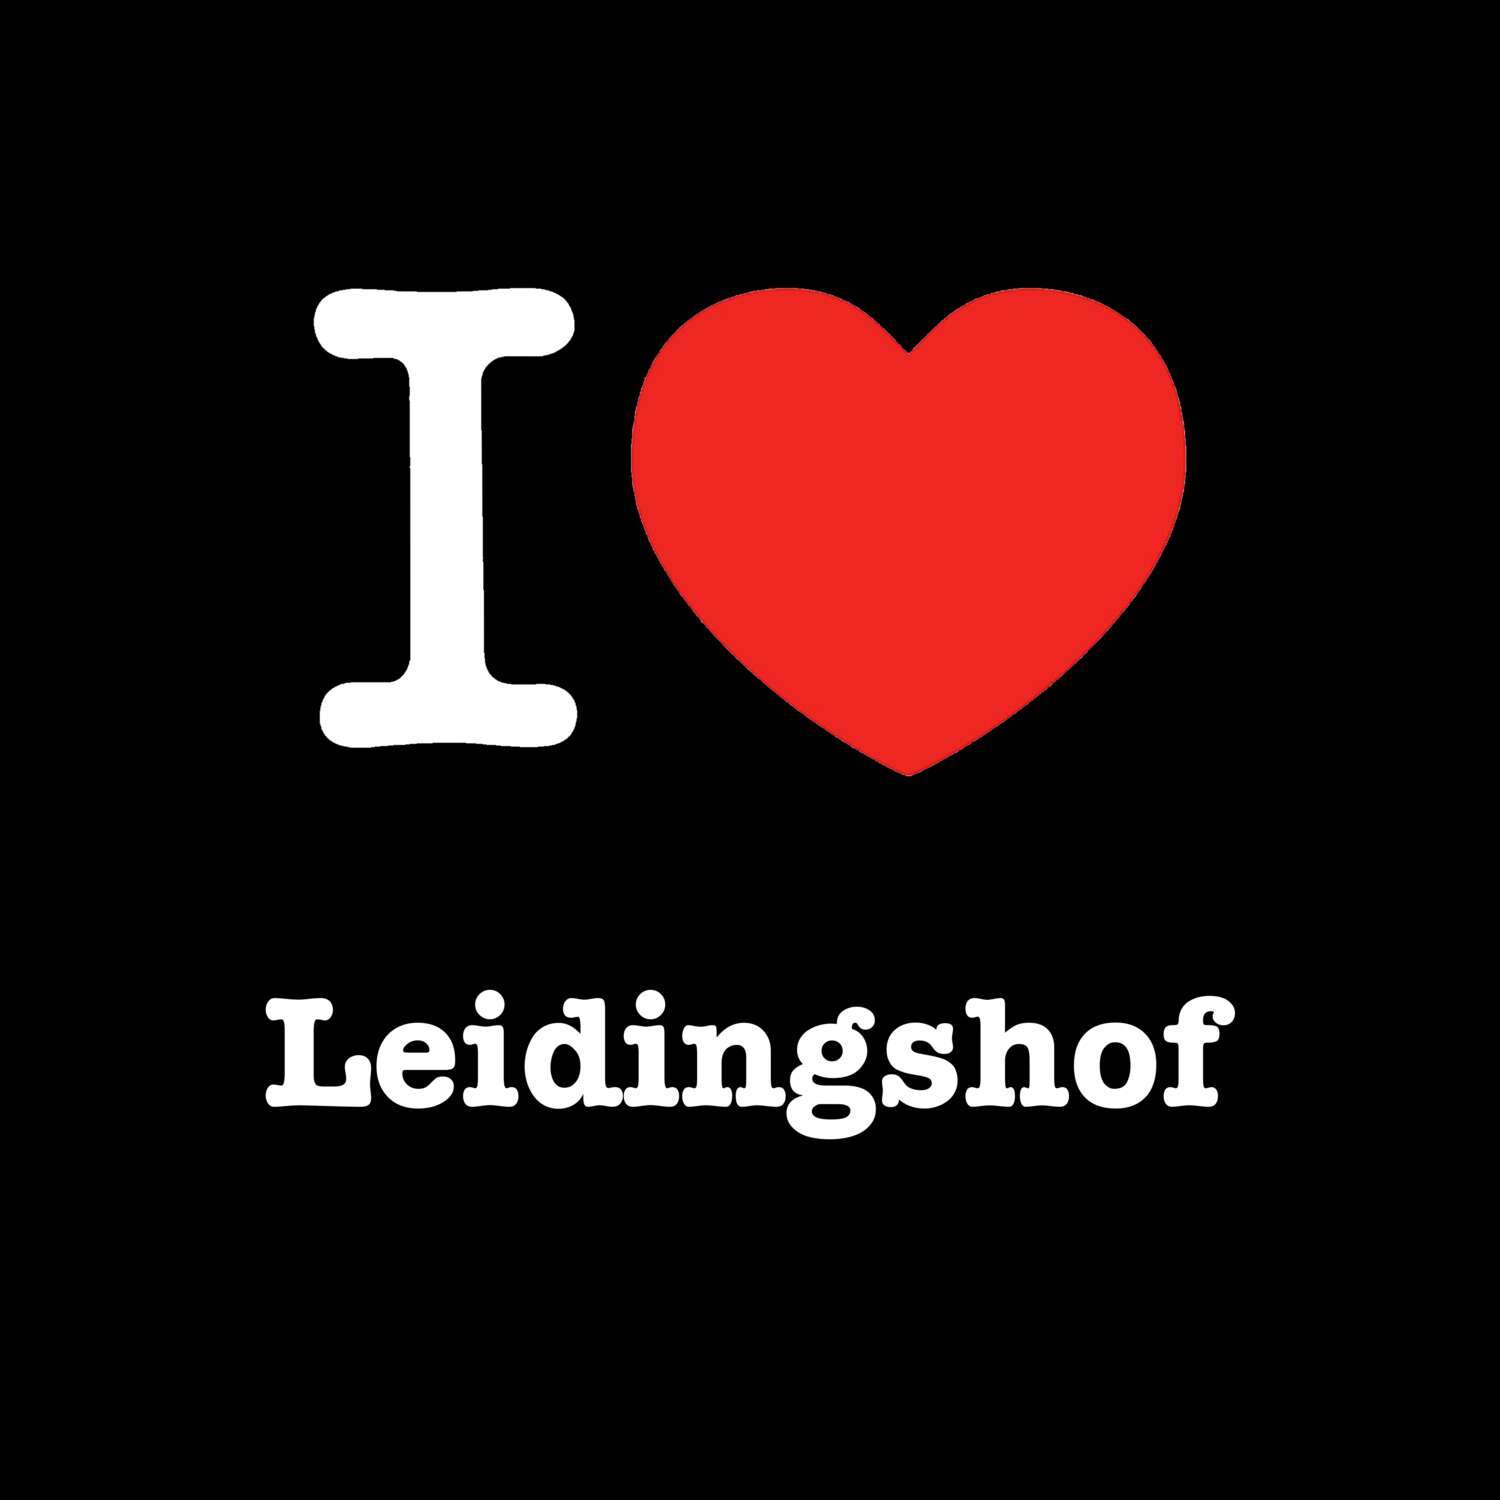 Leidingshof T-Shirt »I love«